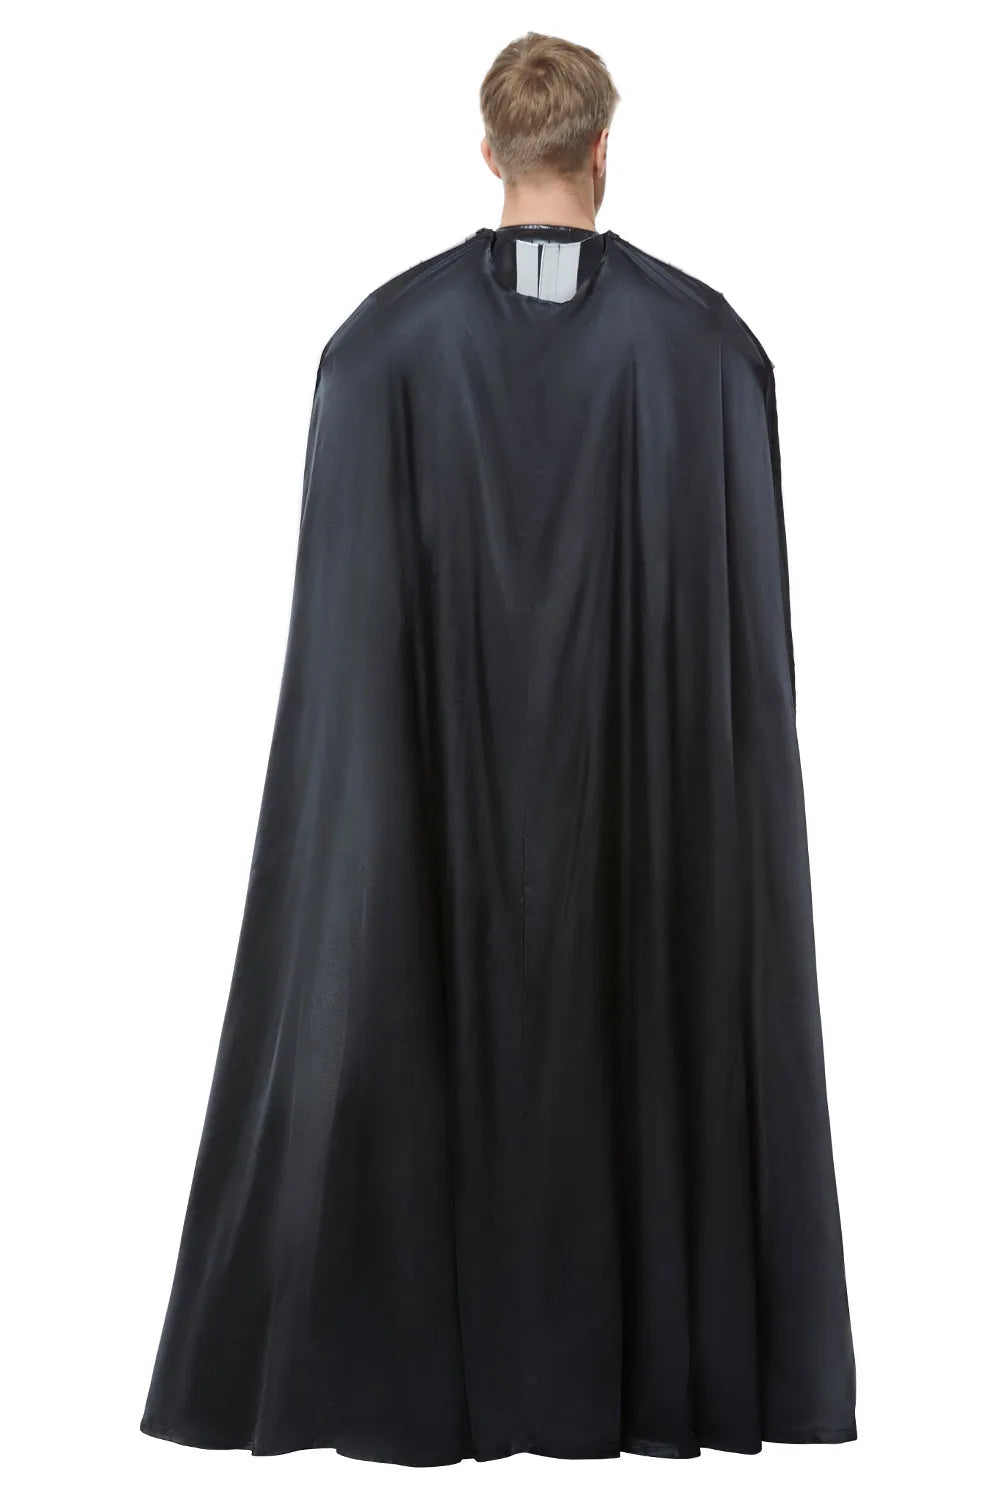 Cosplay Anime Costume Jumpsuit Vest Cloak Black Uniform Fantasia Men Boys Halloween Carnival Party Disguise Suit